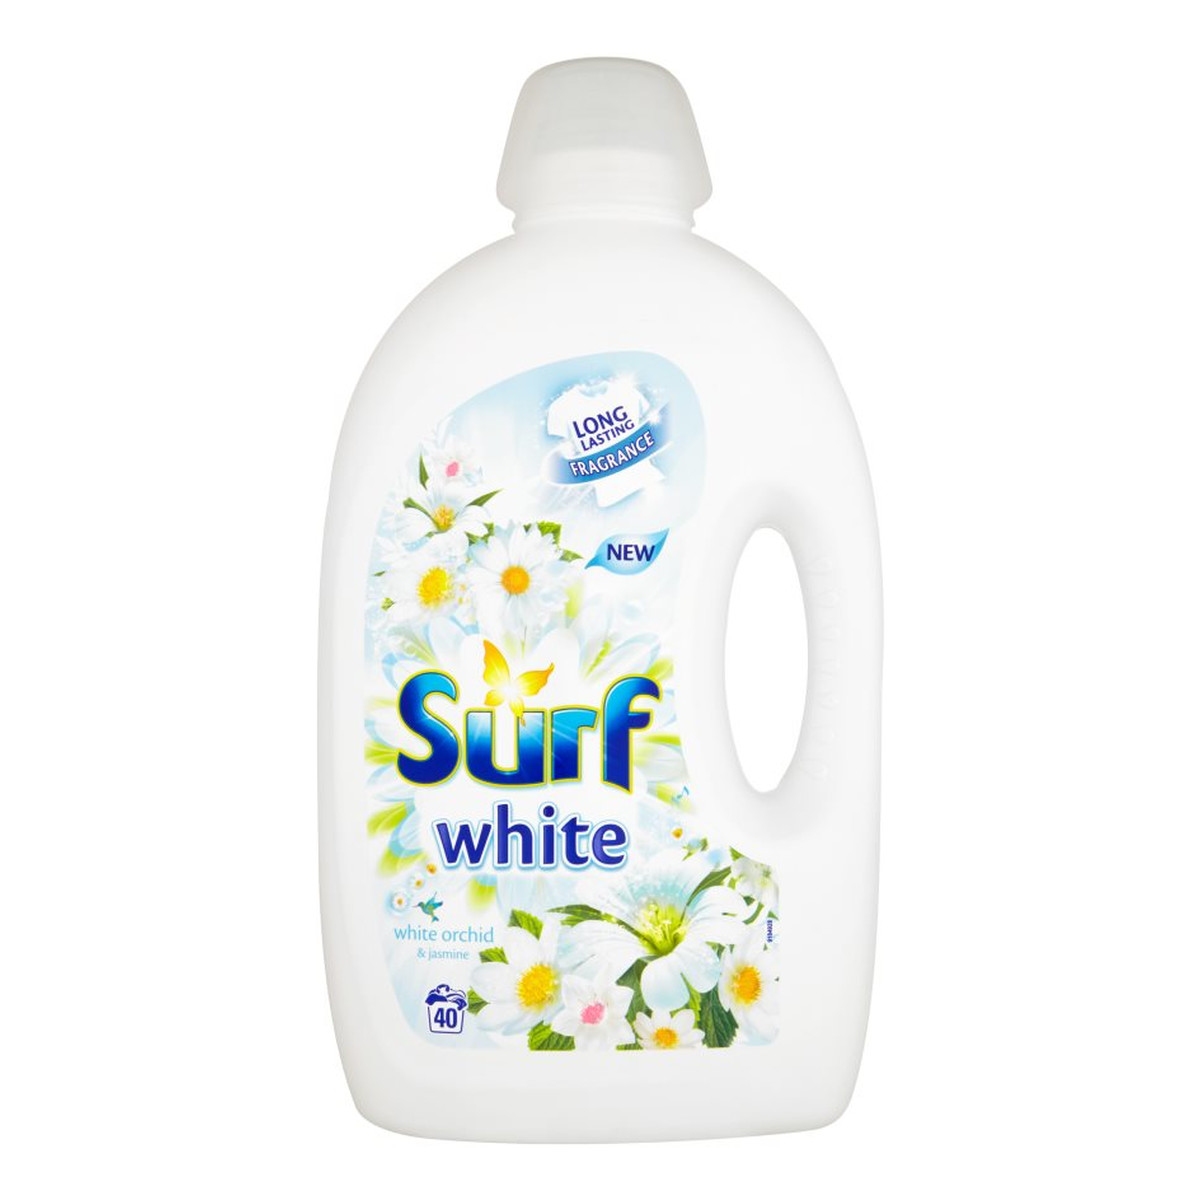 Surf White White Orchid & Jasmine Płyn do prania (40 prań) 2800ml